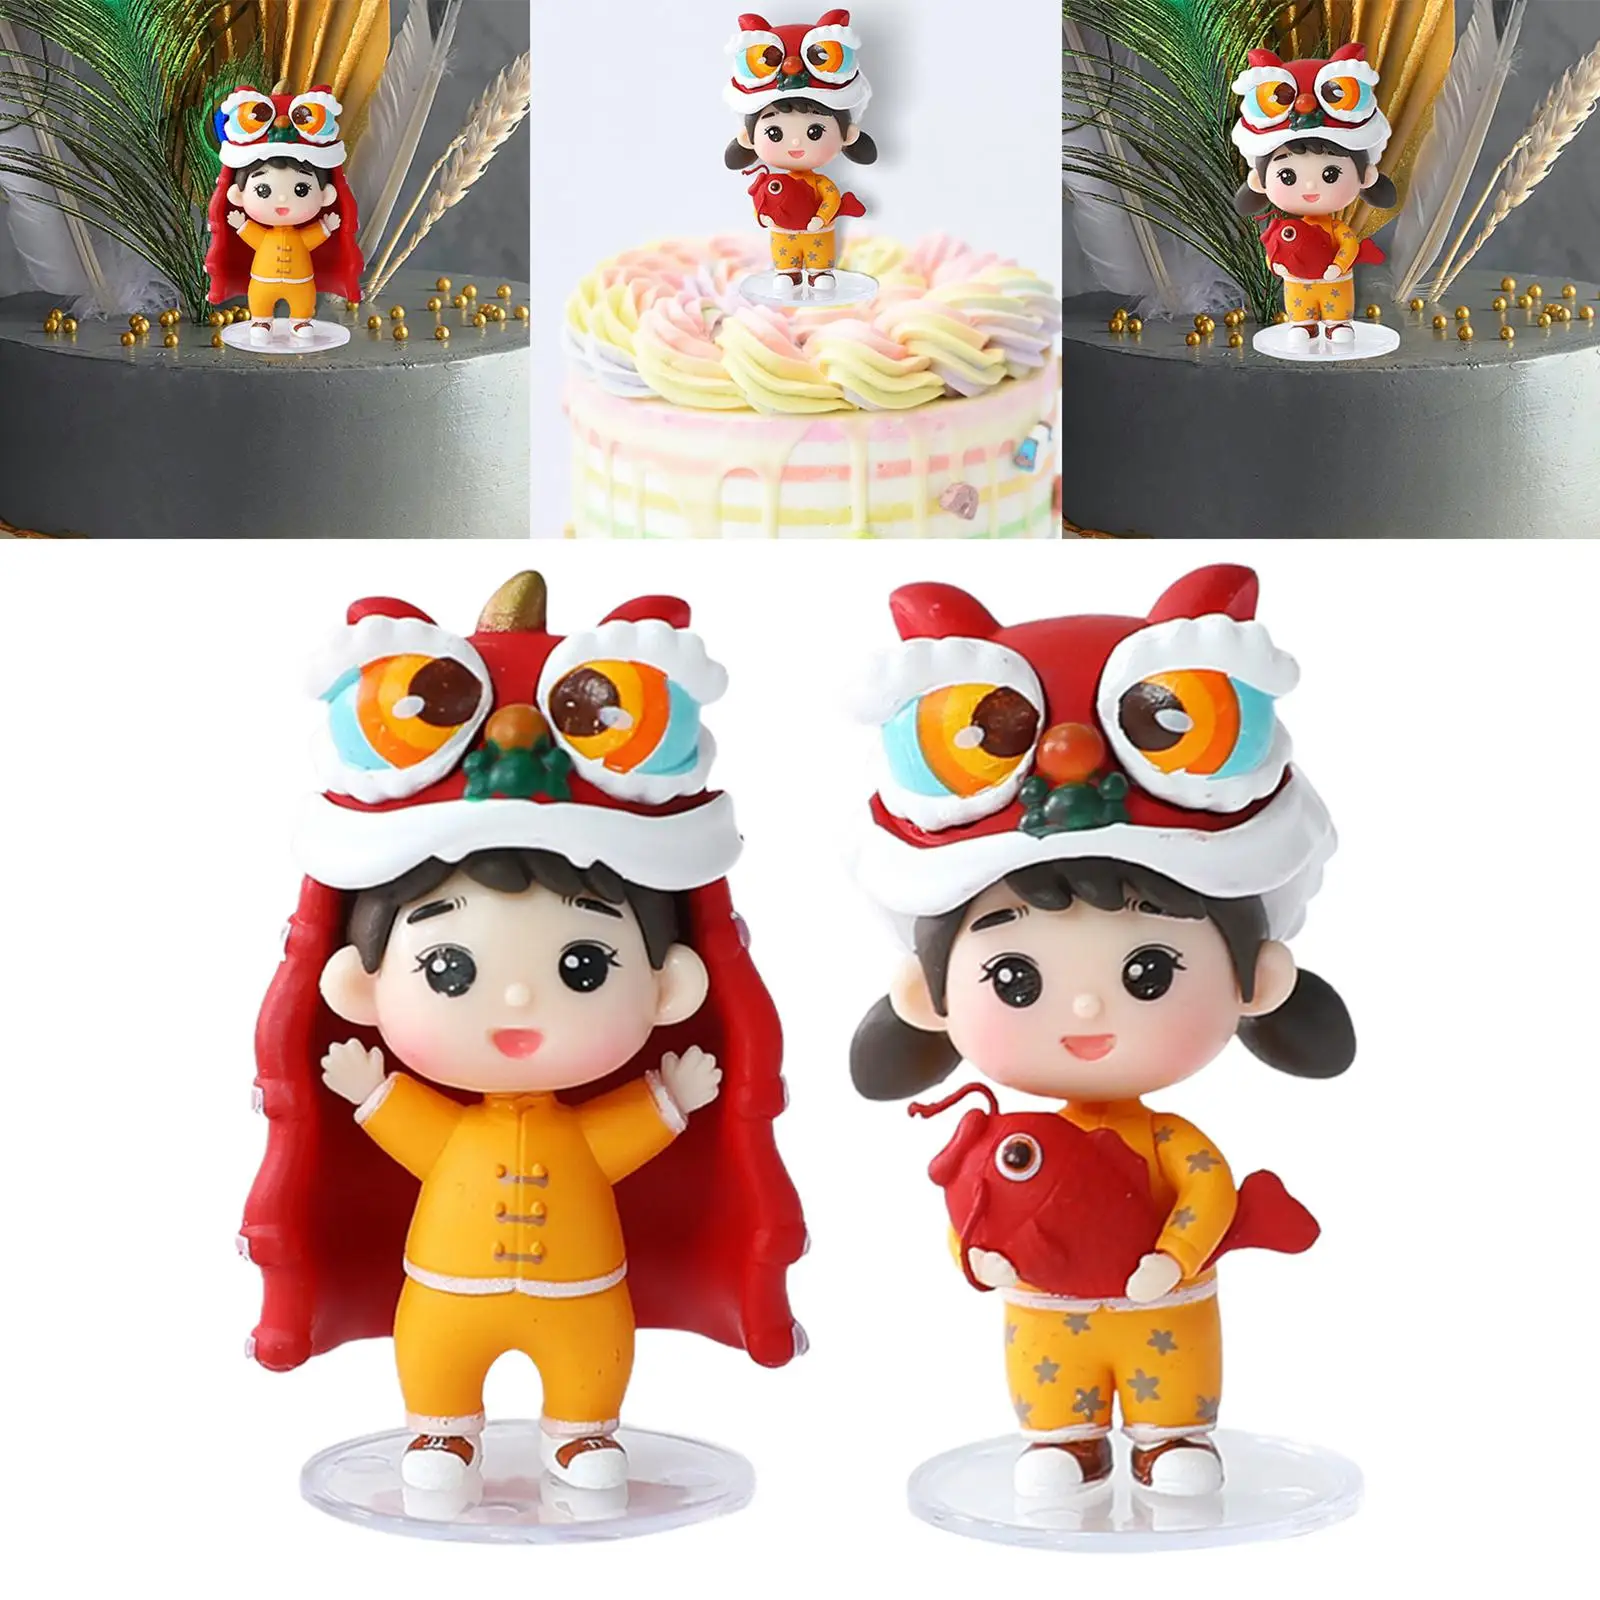 Cute Chinese New Year Doll Figurine Art Sculpture for Shelf Decor Cake Topper Decor